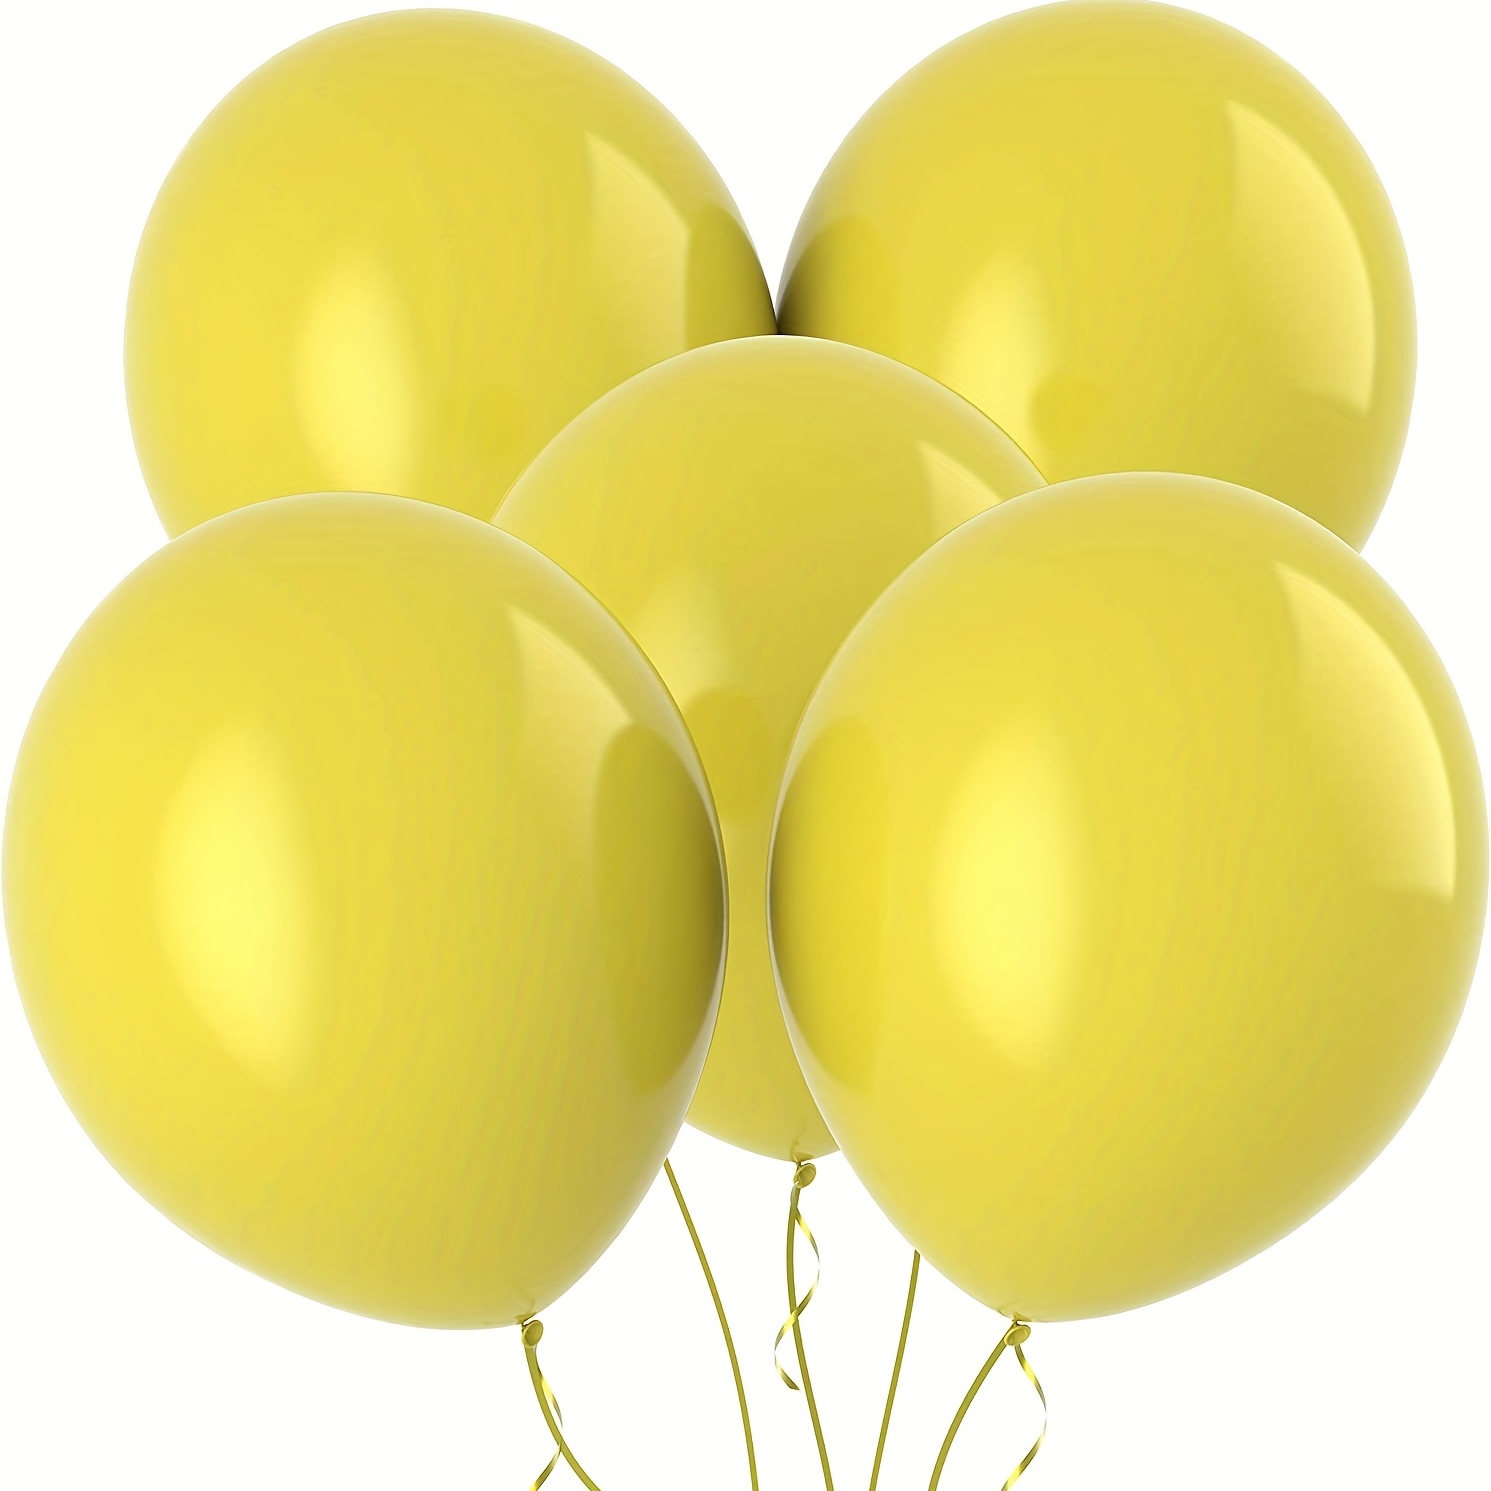 PartyWoo Bee Balloons, 72 pcs Yellow Balloons Yellow Polka Dot Balloons  Black Balloons and Bee Foil